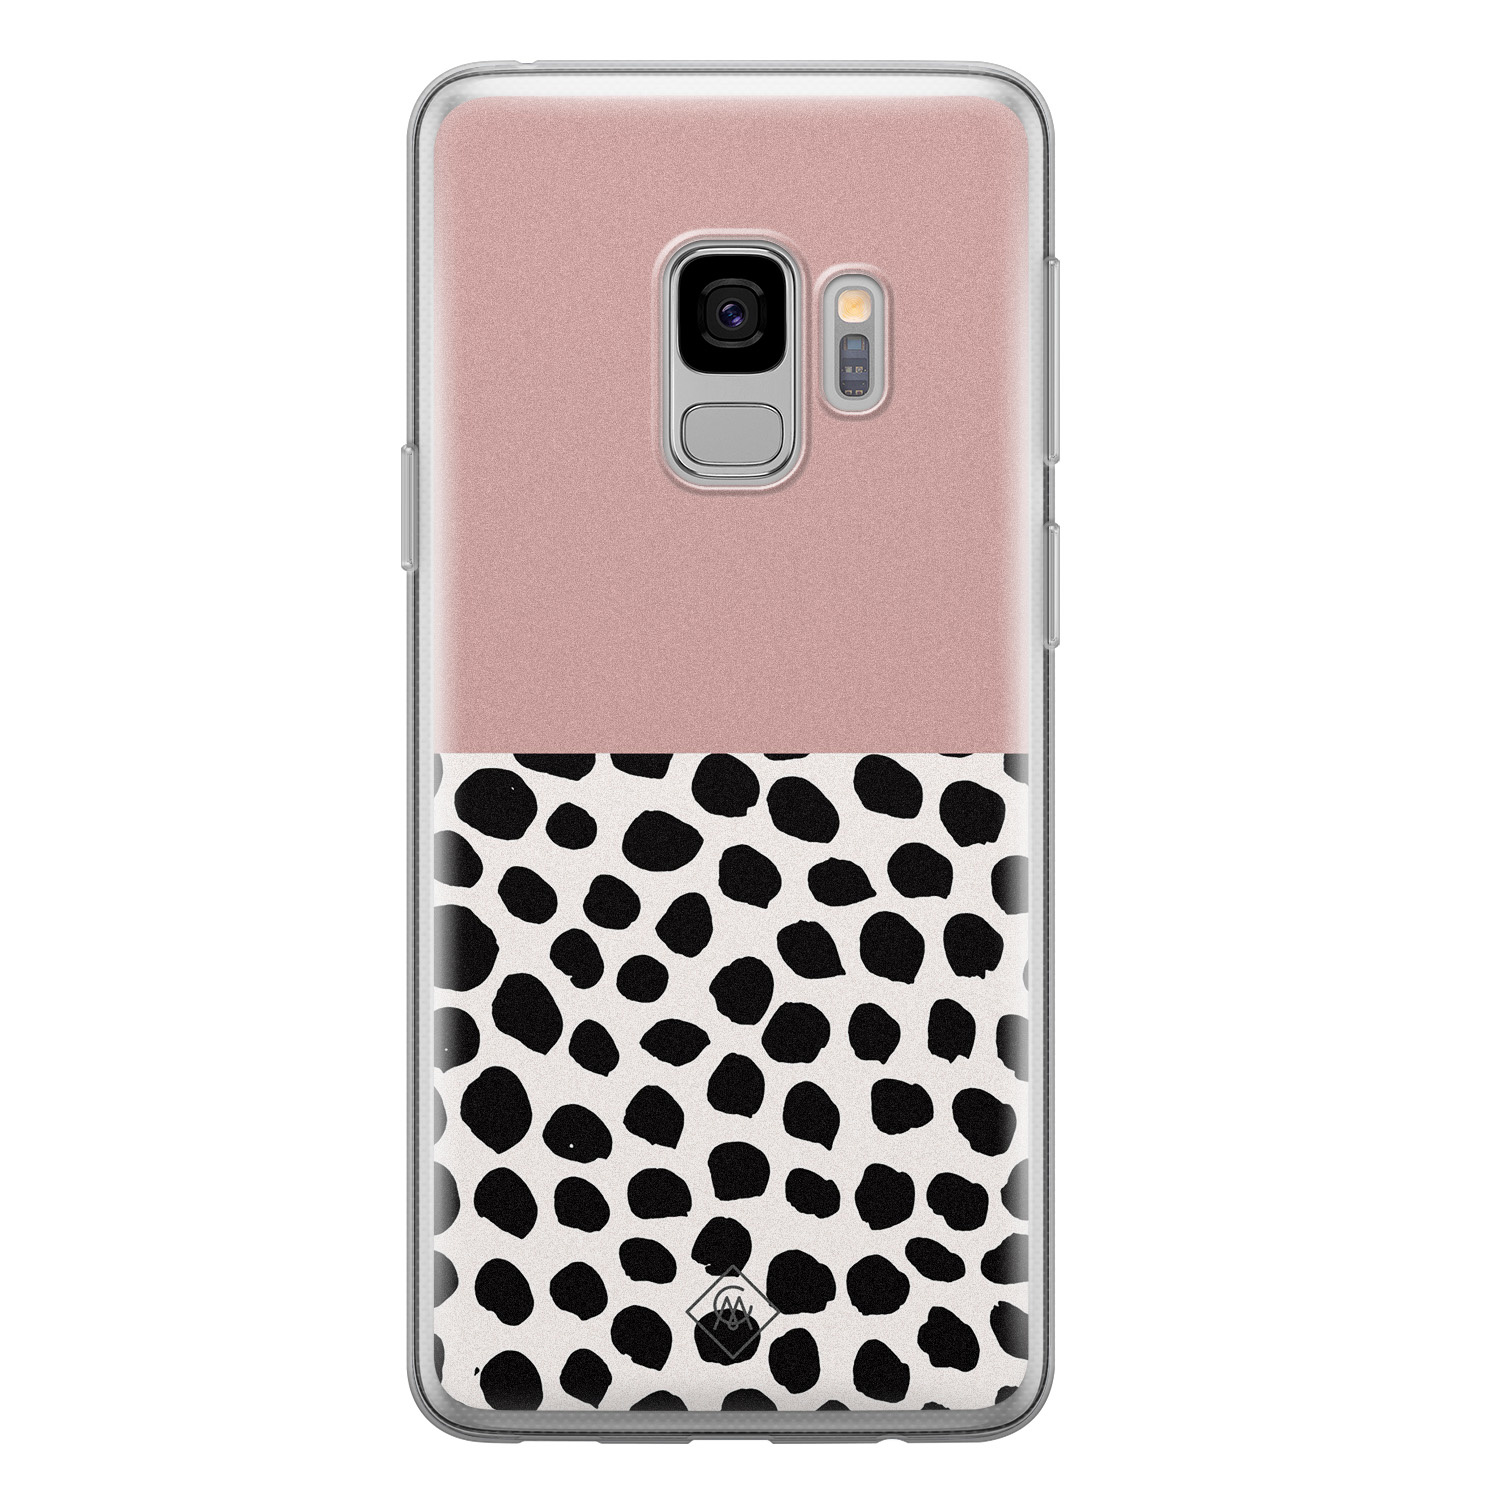 Samsung Galaxy S9 siliconen hoesje - Pink dots